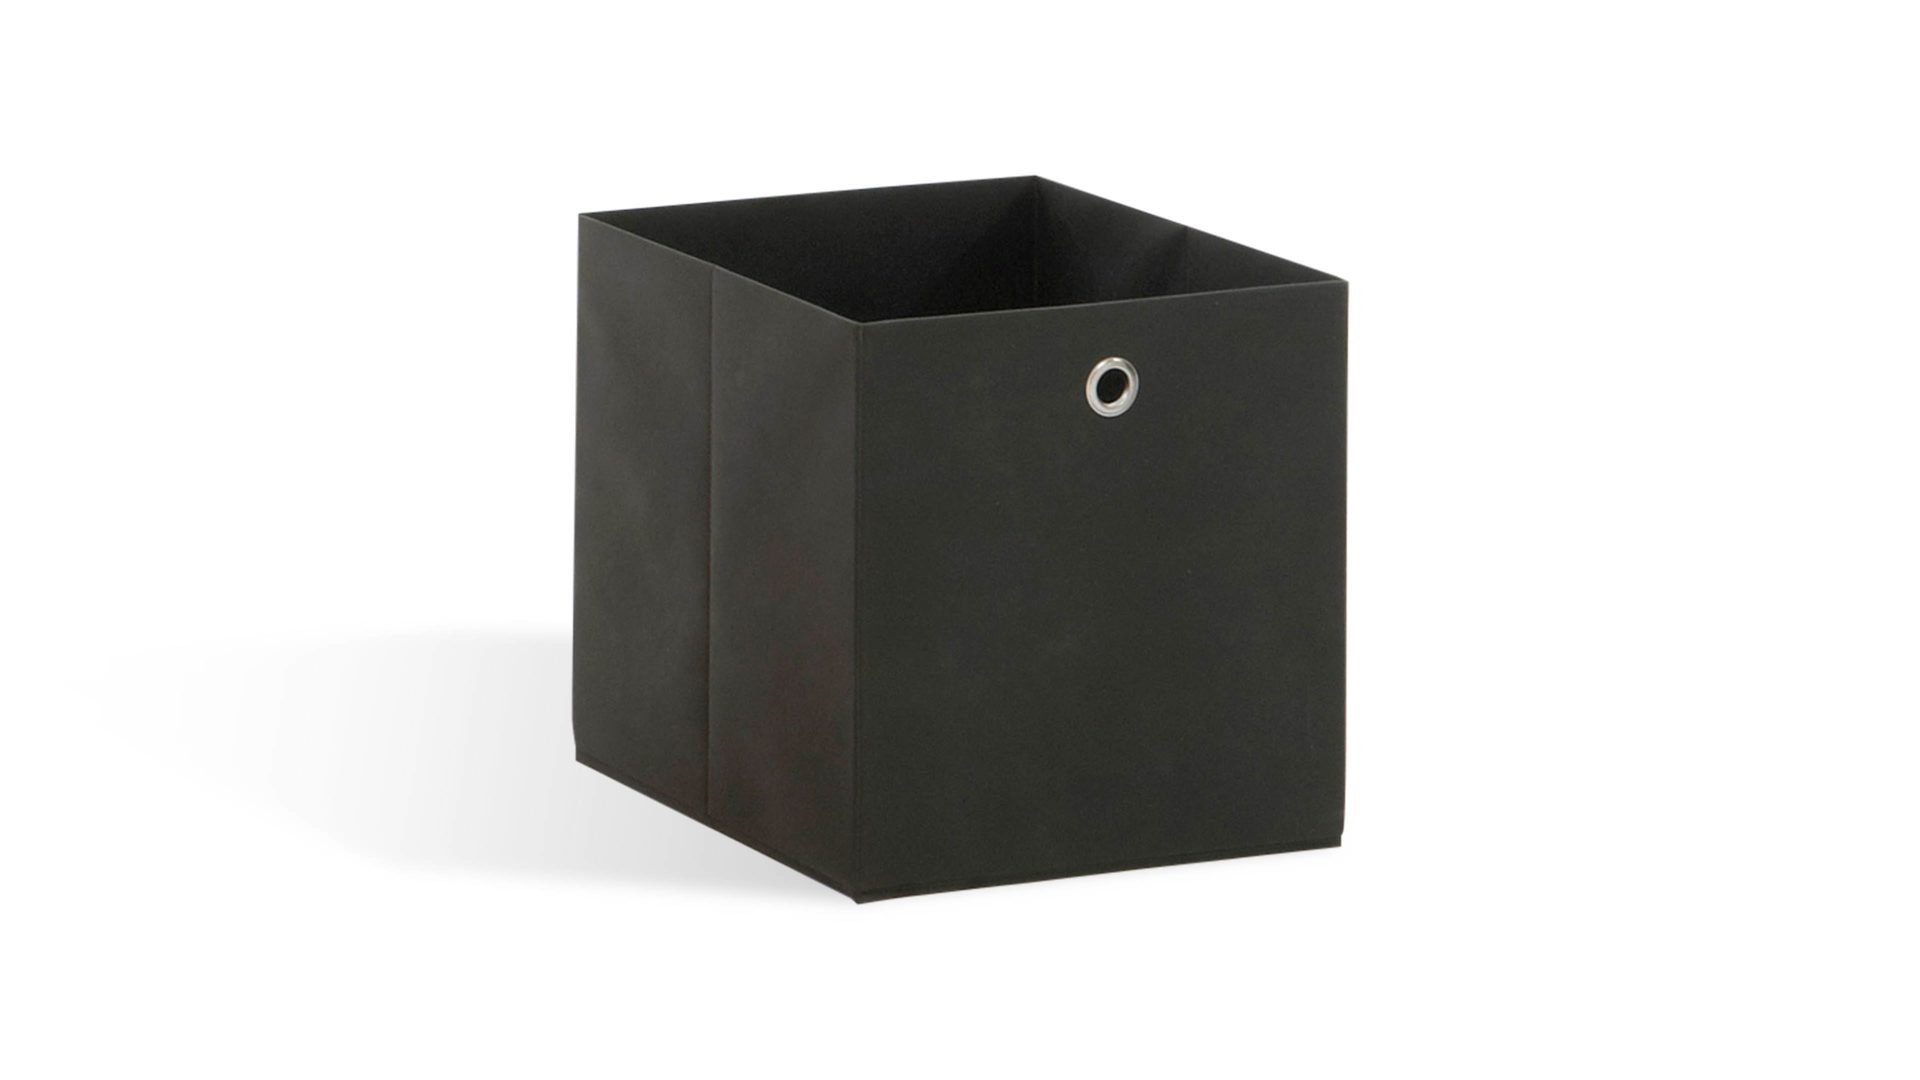 Faltbox Fmd furniture aus Stoff in Grau Faltbox anthrazitfarbenes, verstärktes Vlies - ca. 32 x 32 cm